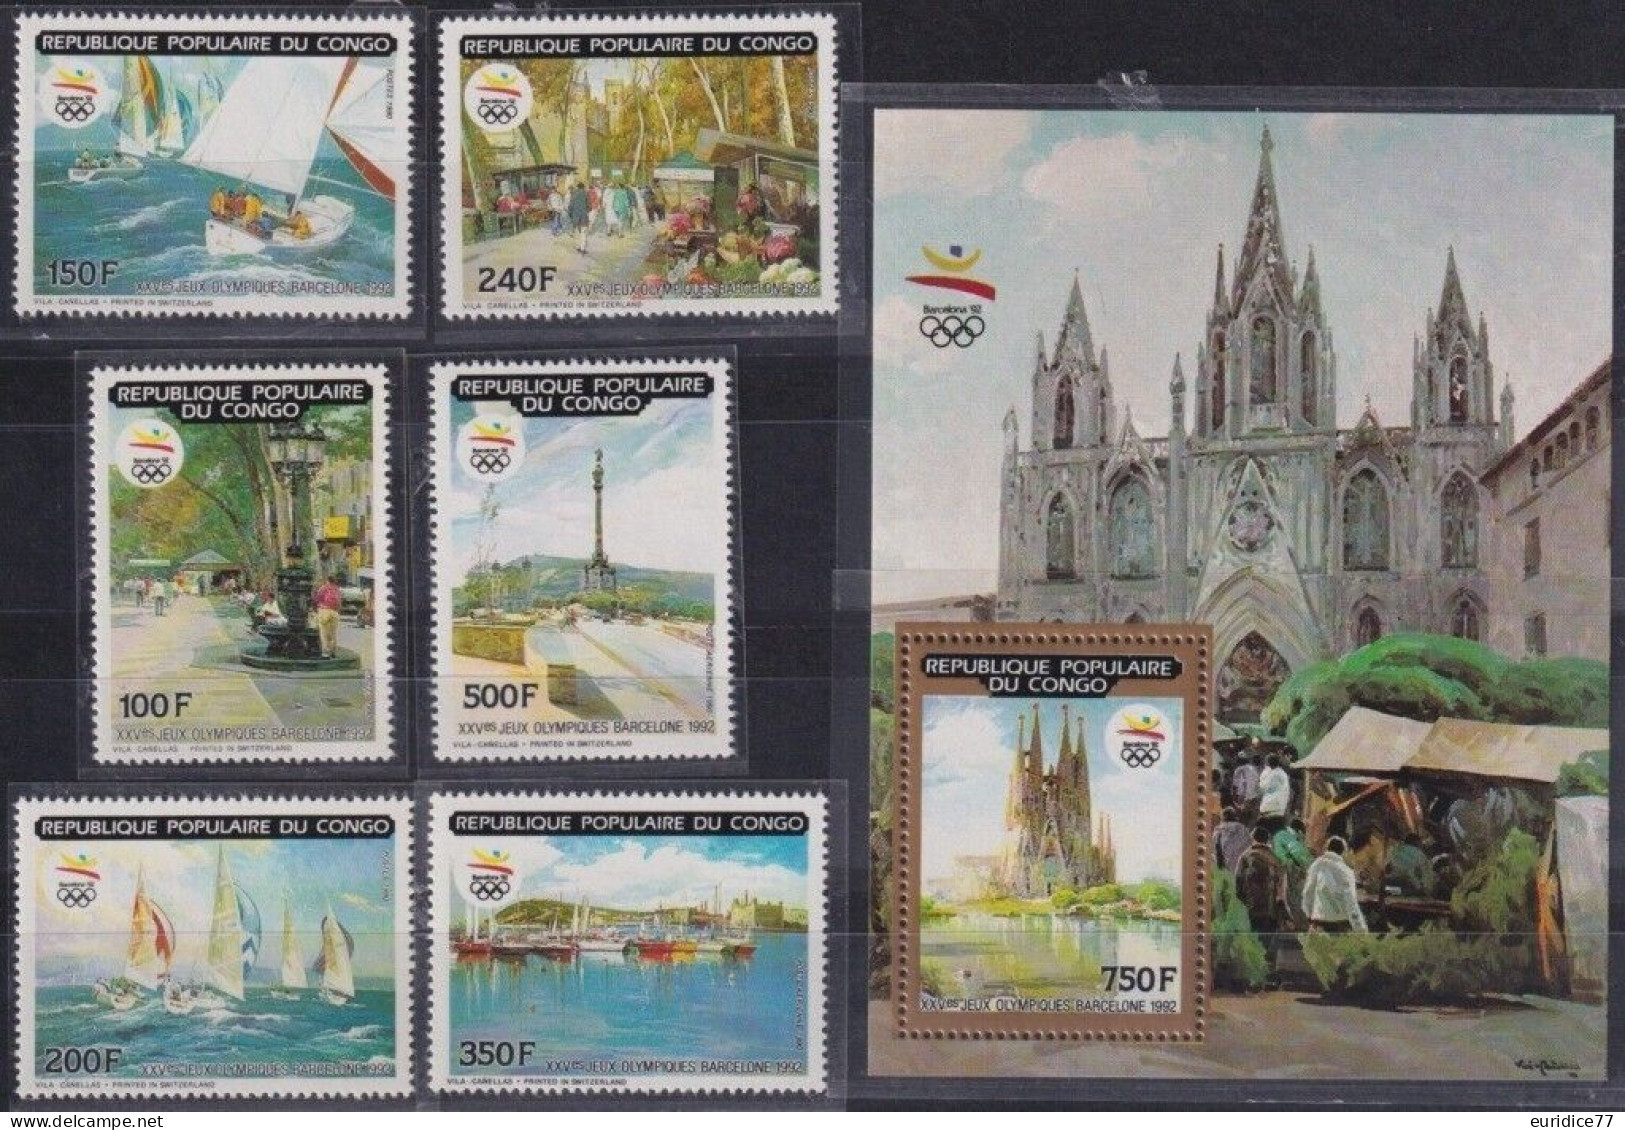 Congo Rep. Popular 1990 - Olympic Games Barcelona 92 Mnh** - Summer 1992: Barcelona